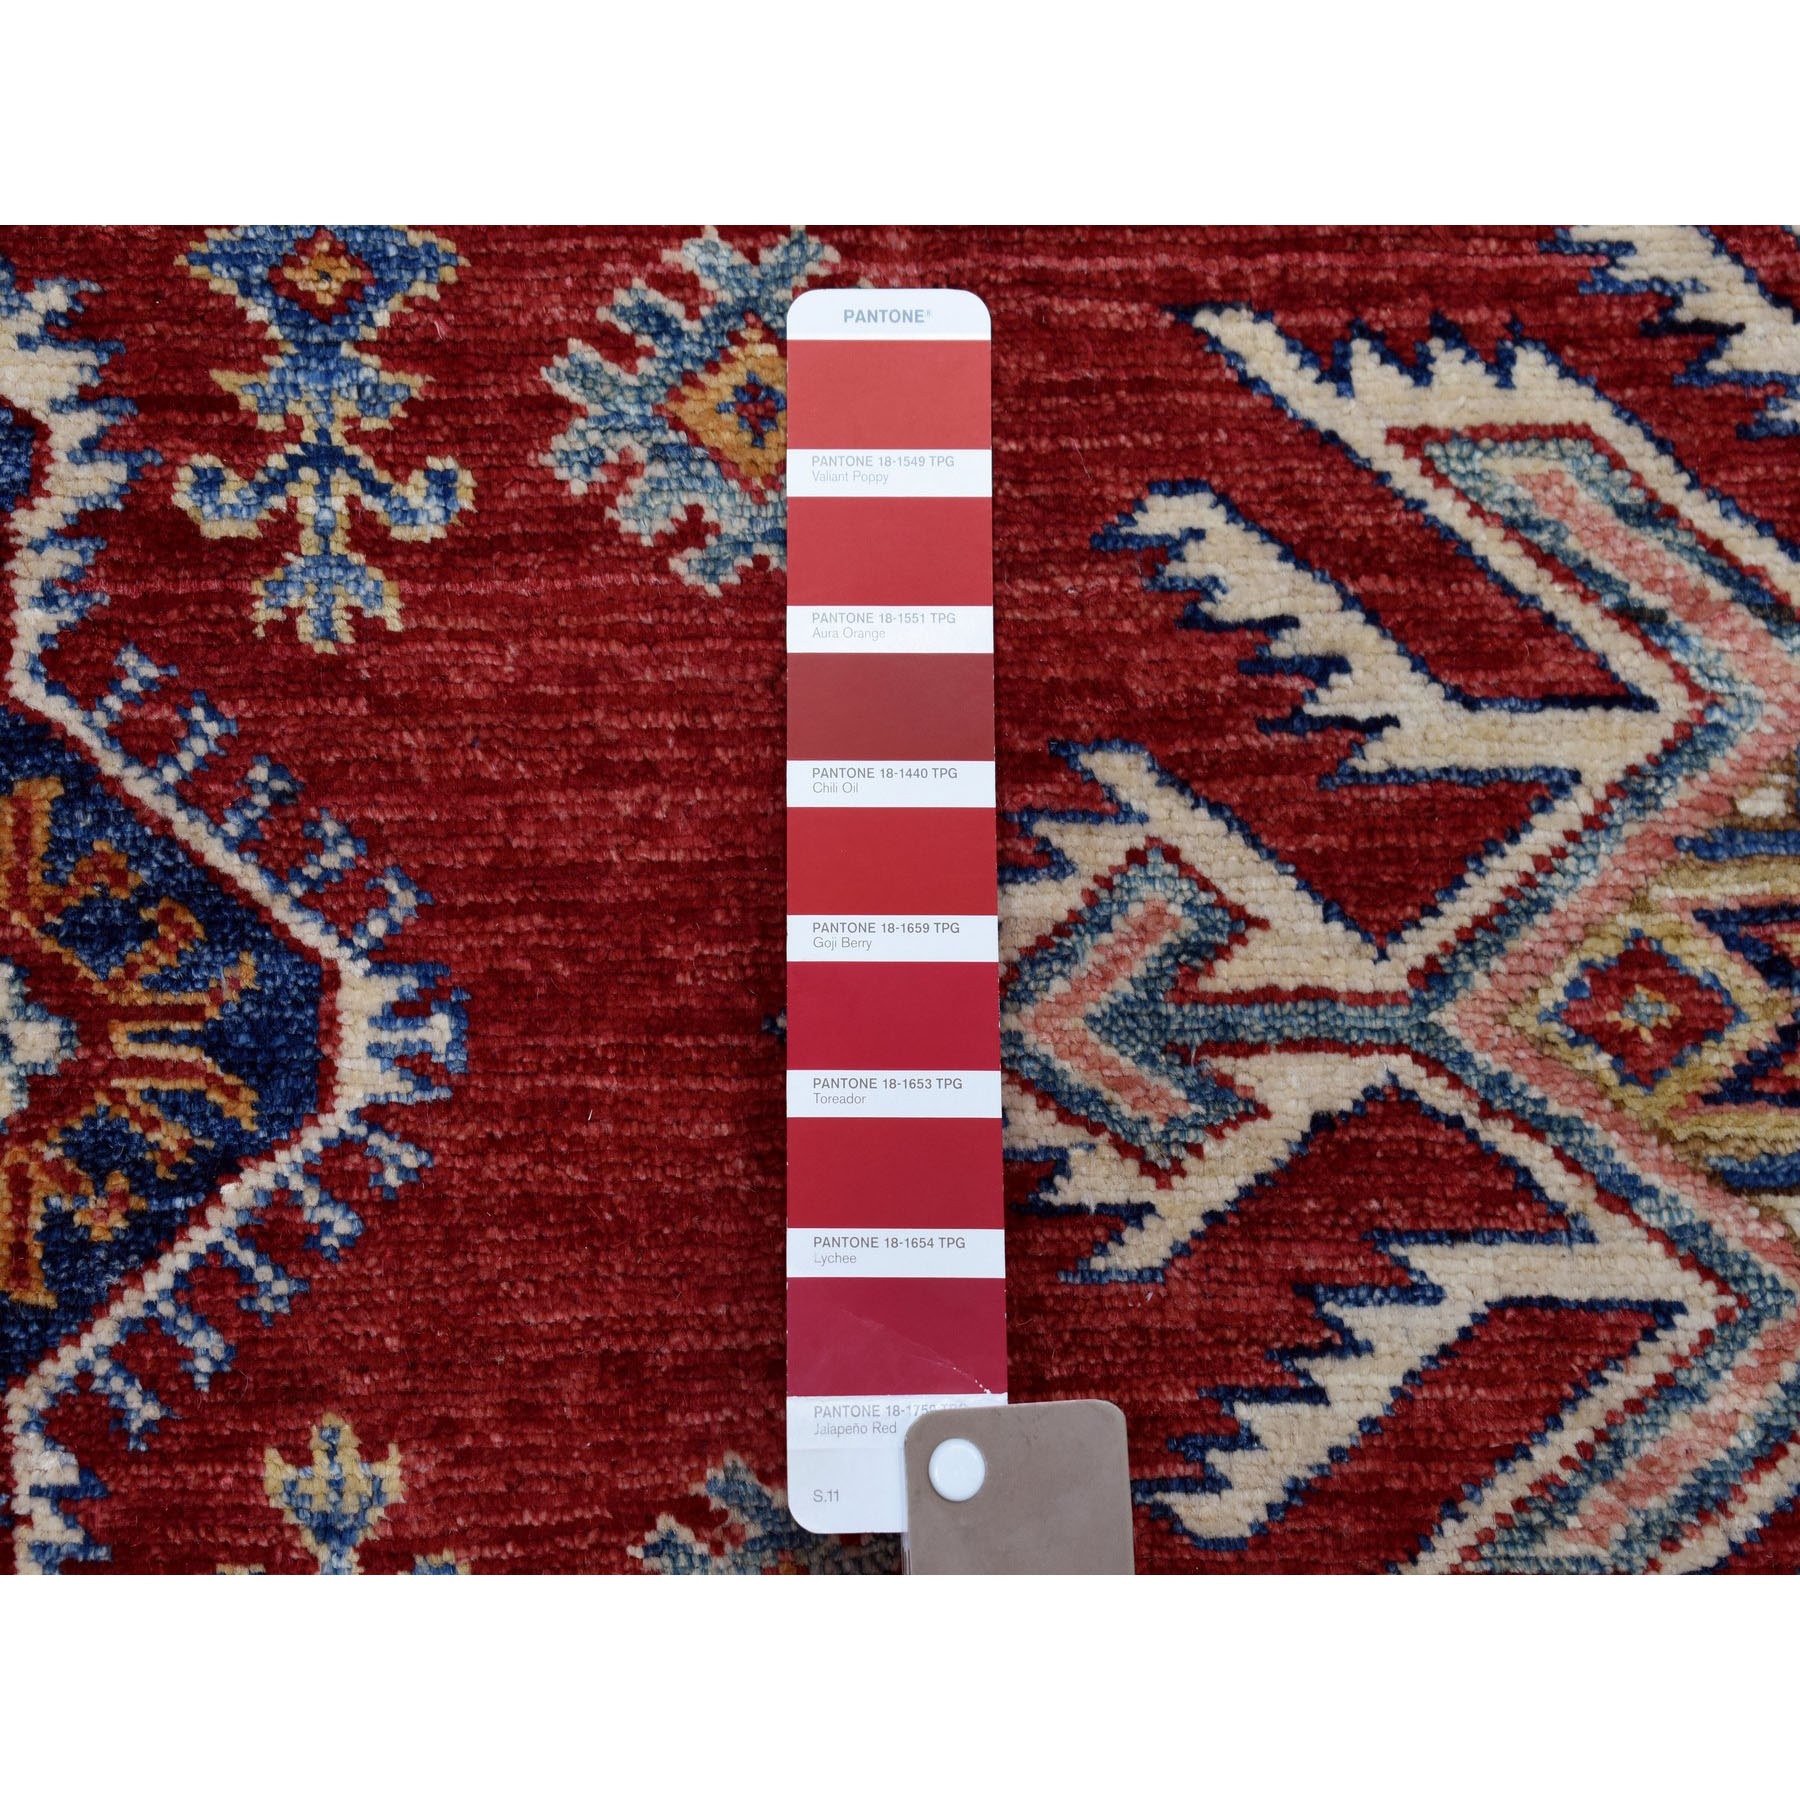 6-3 x9-5  Red Super Kazak Pure Wool Geometric Design Hand-Knotted Oriental Rug 